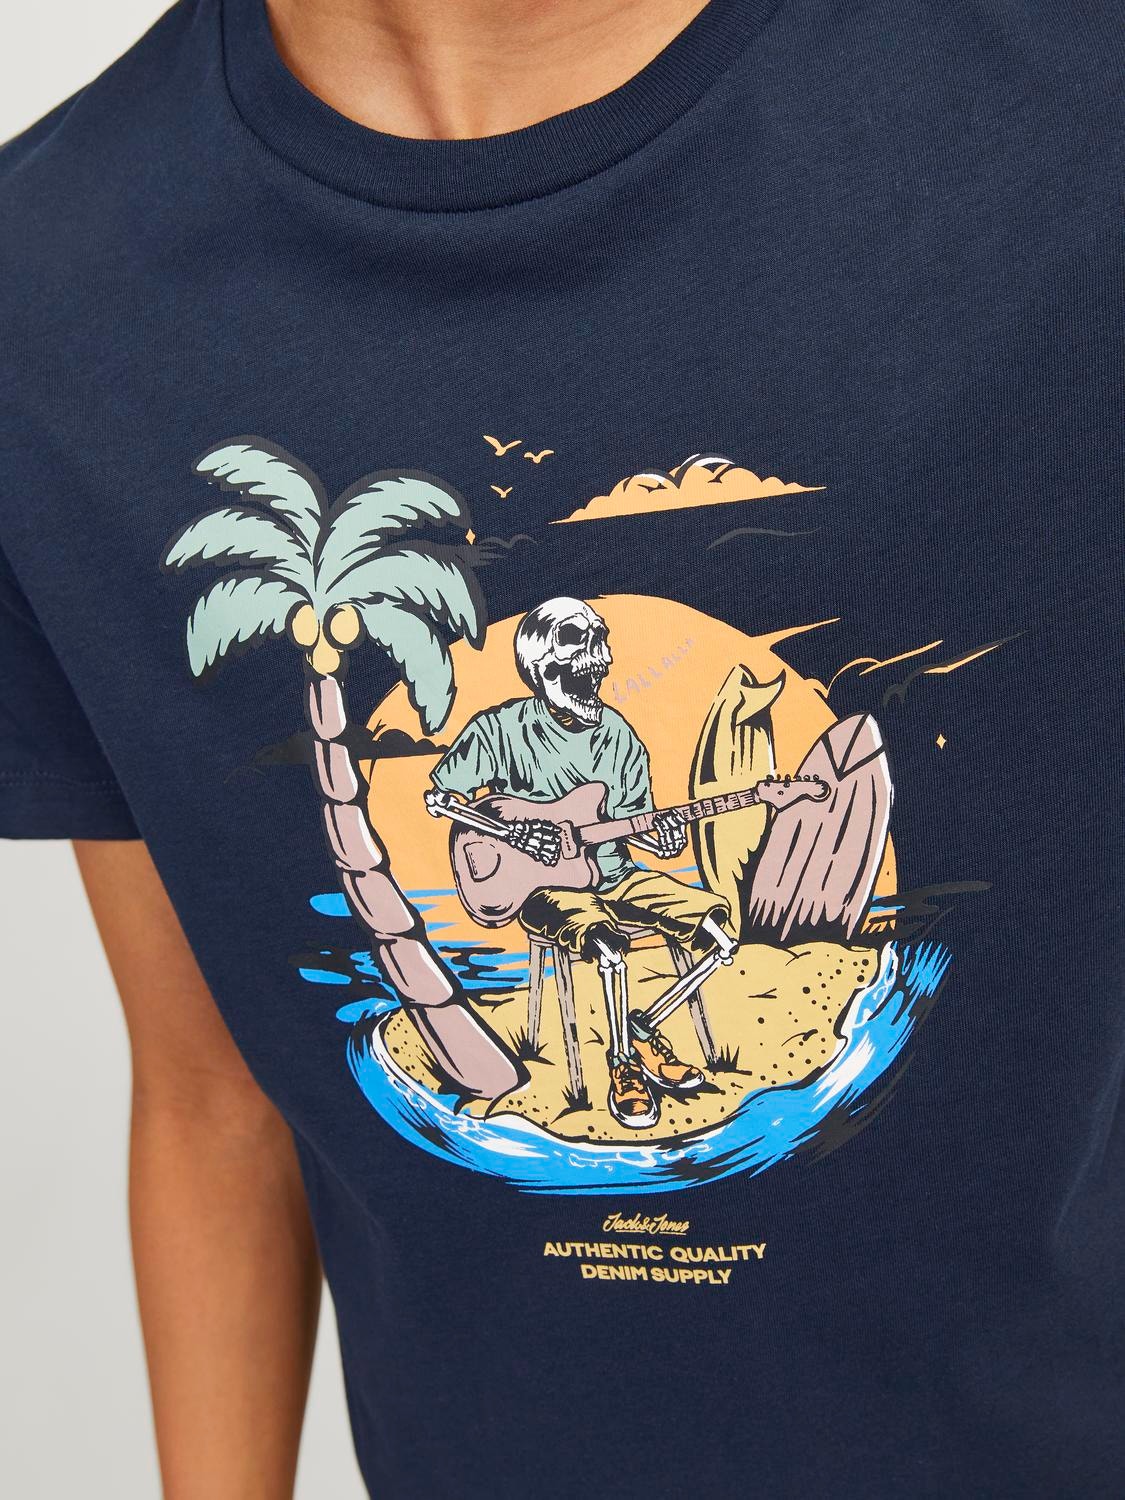 Jack & Jones Camiseta Estampado Para chicos -Navy Blazer - 12249732